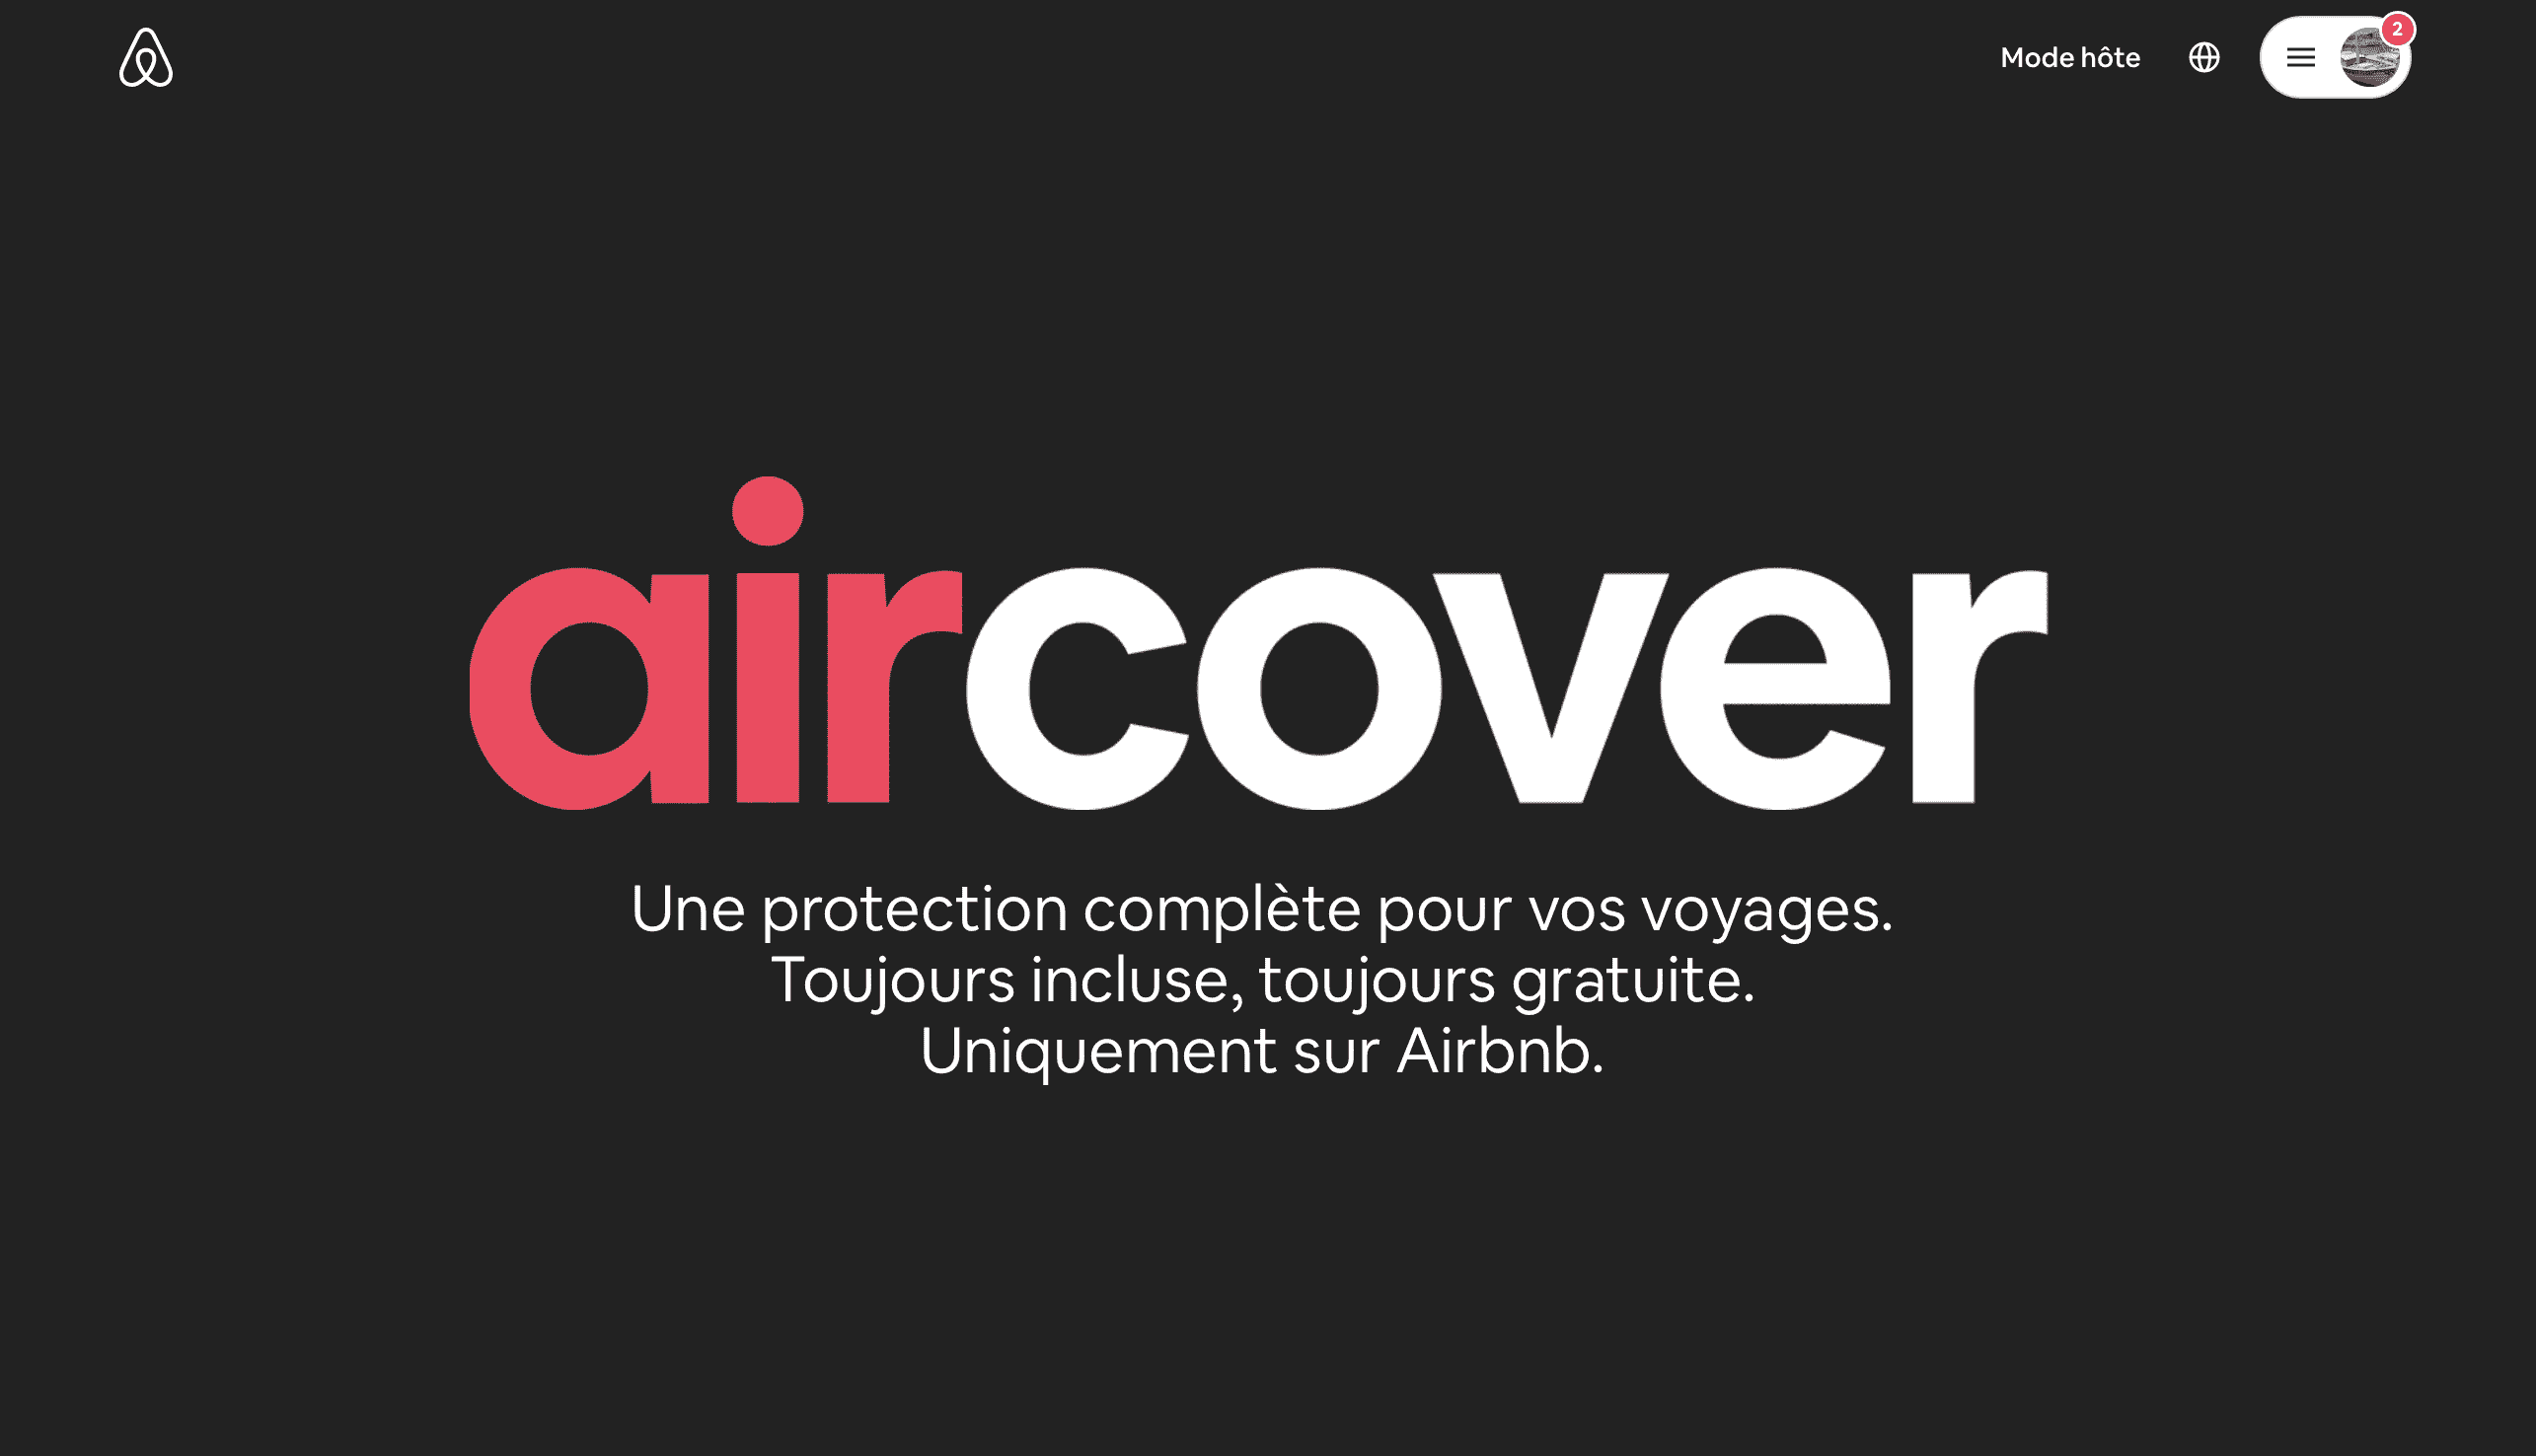 Assurance Airbnb Aircover